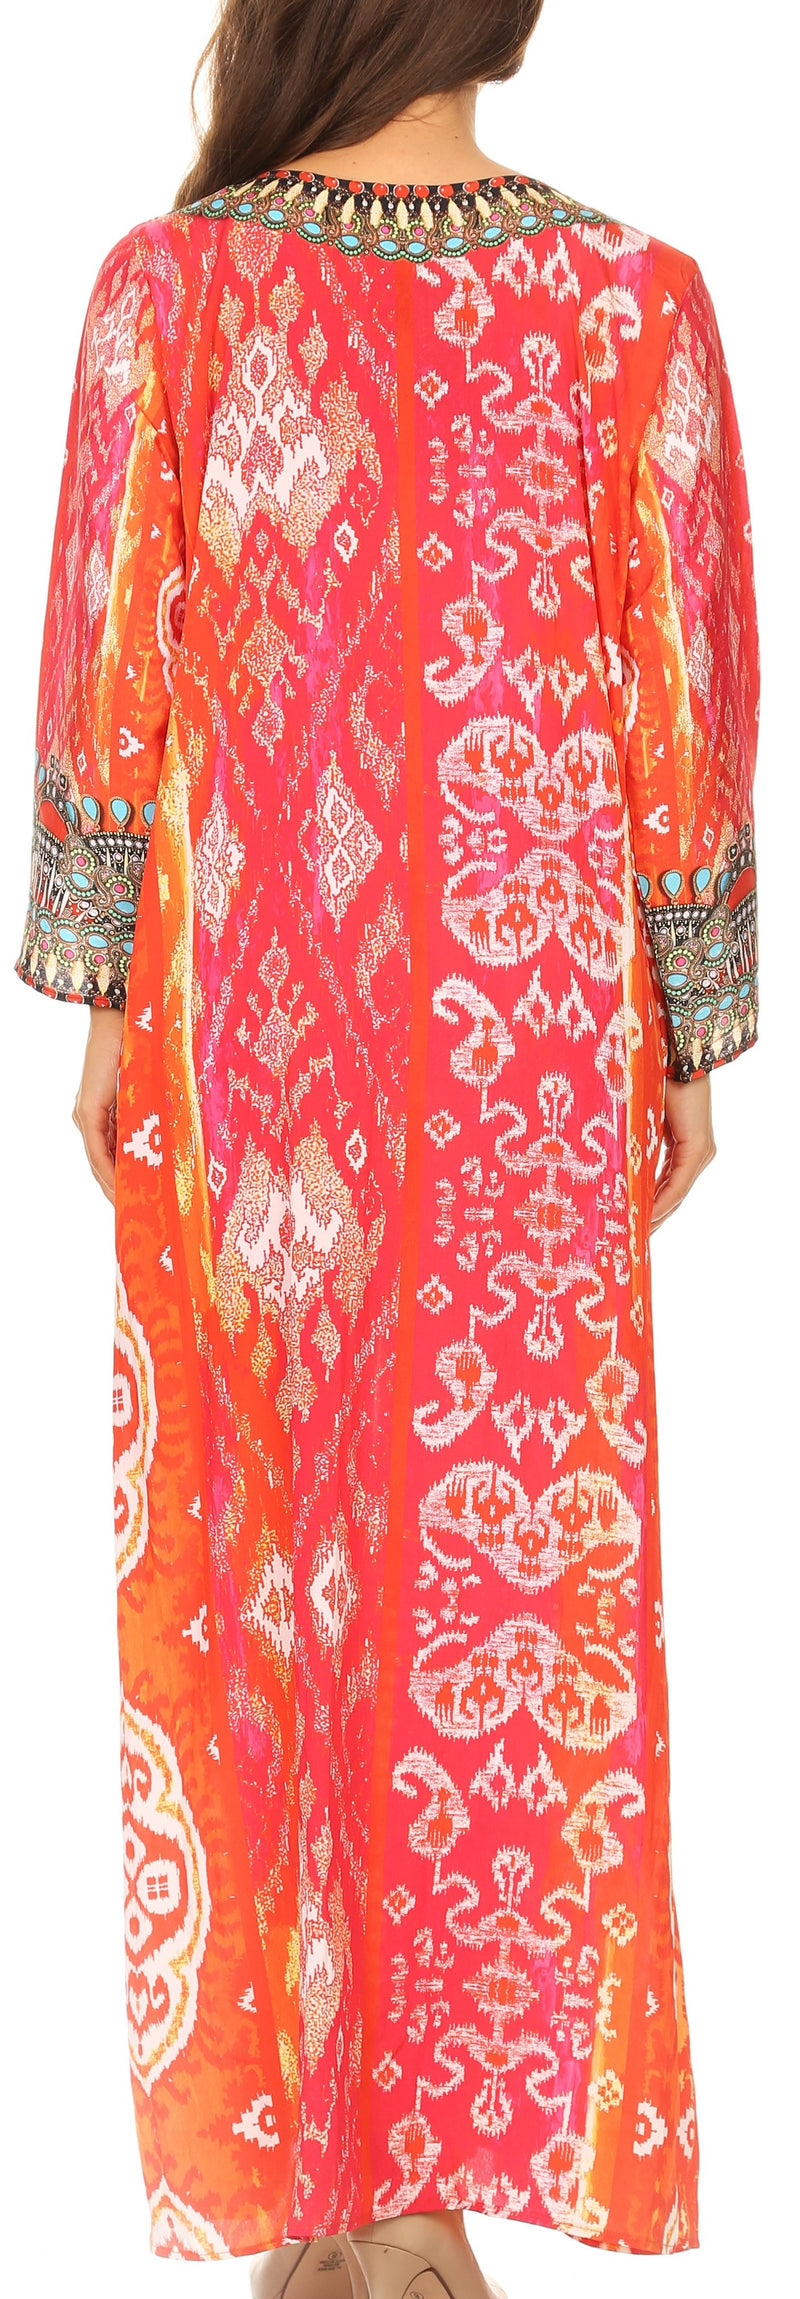 Sakkas Khari V-neck Long Kaftan Dress with Colorful Print and Rhinestones